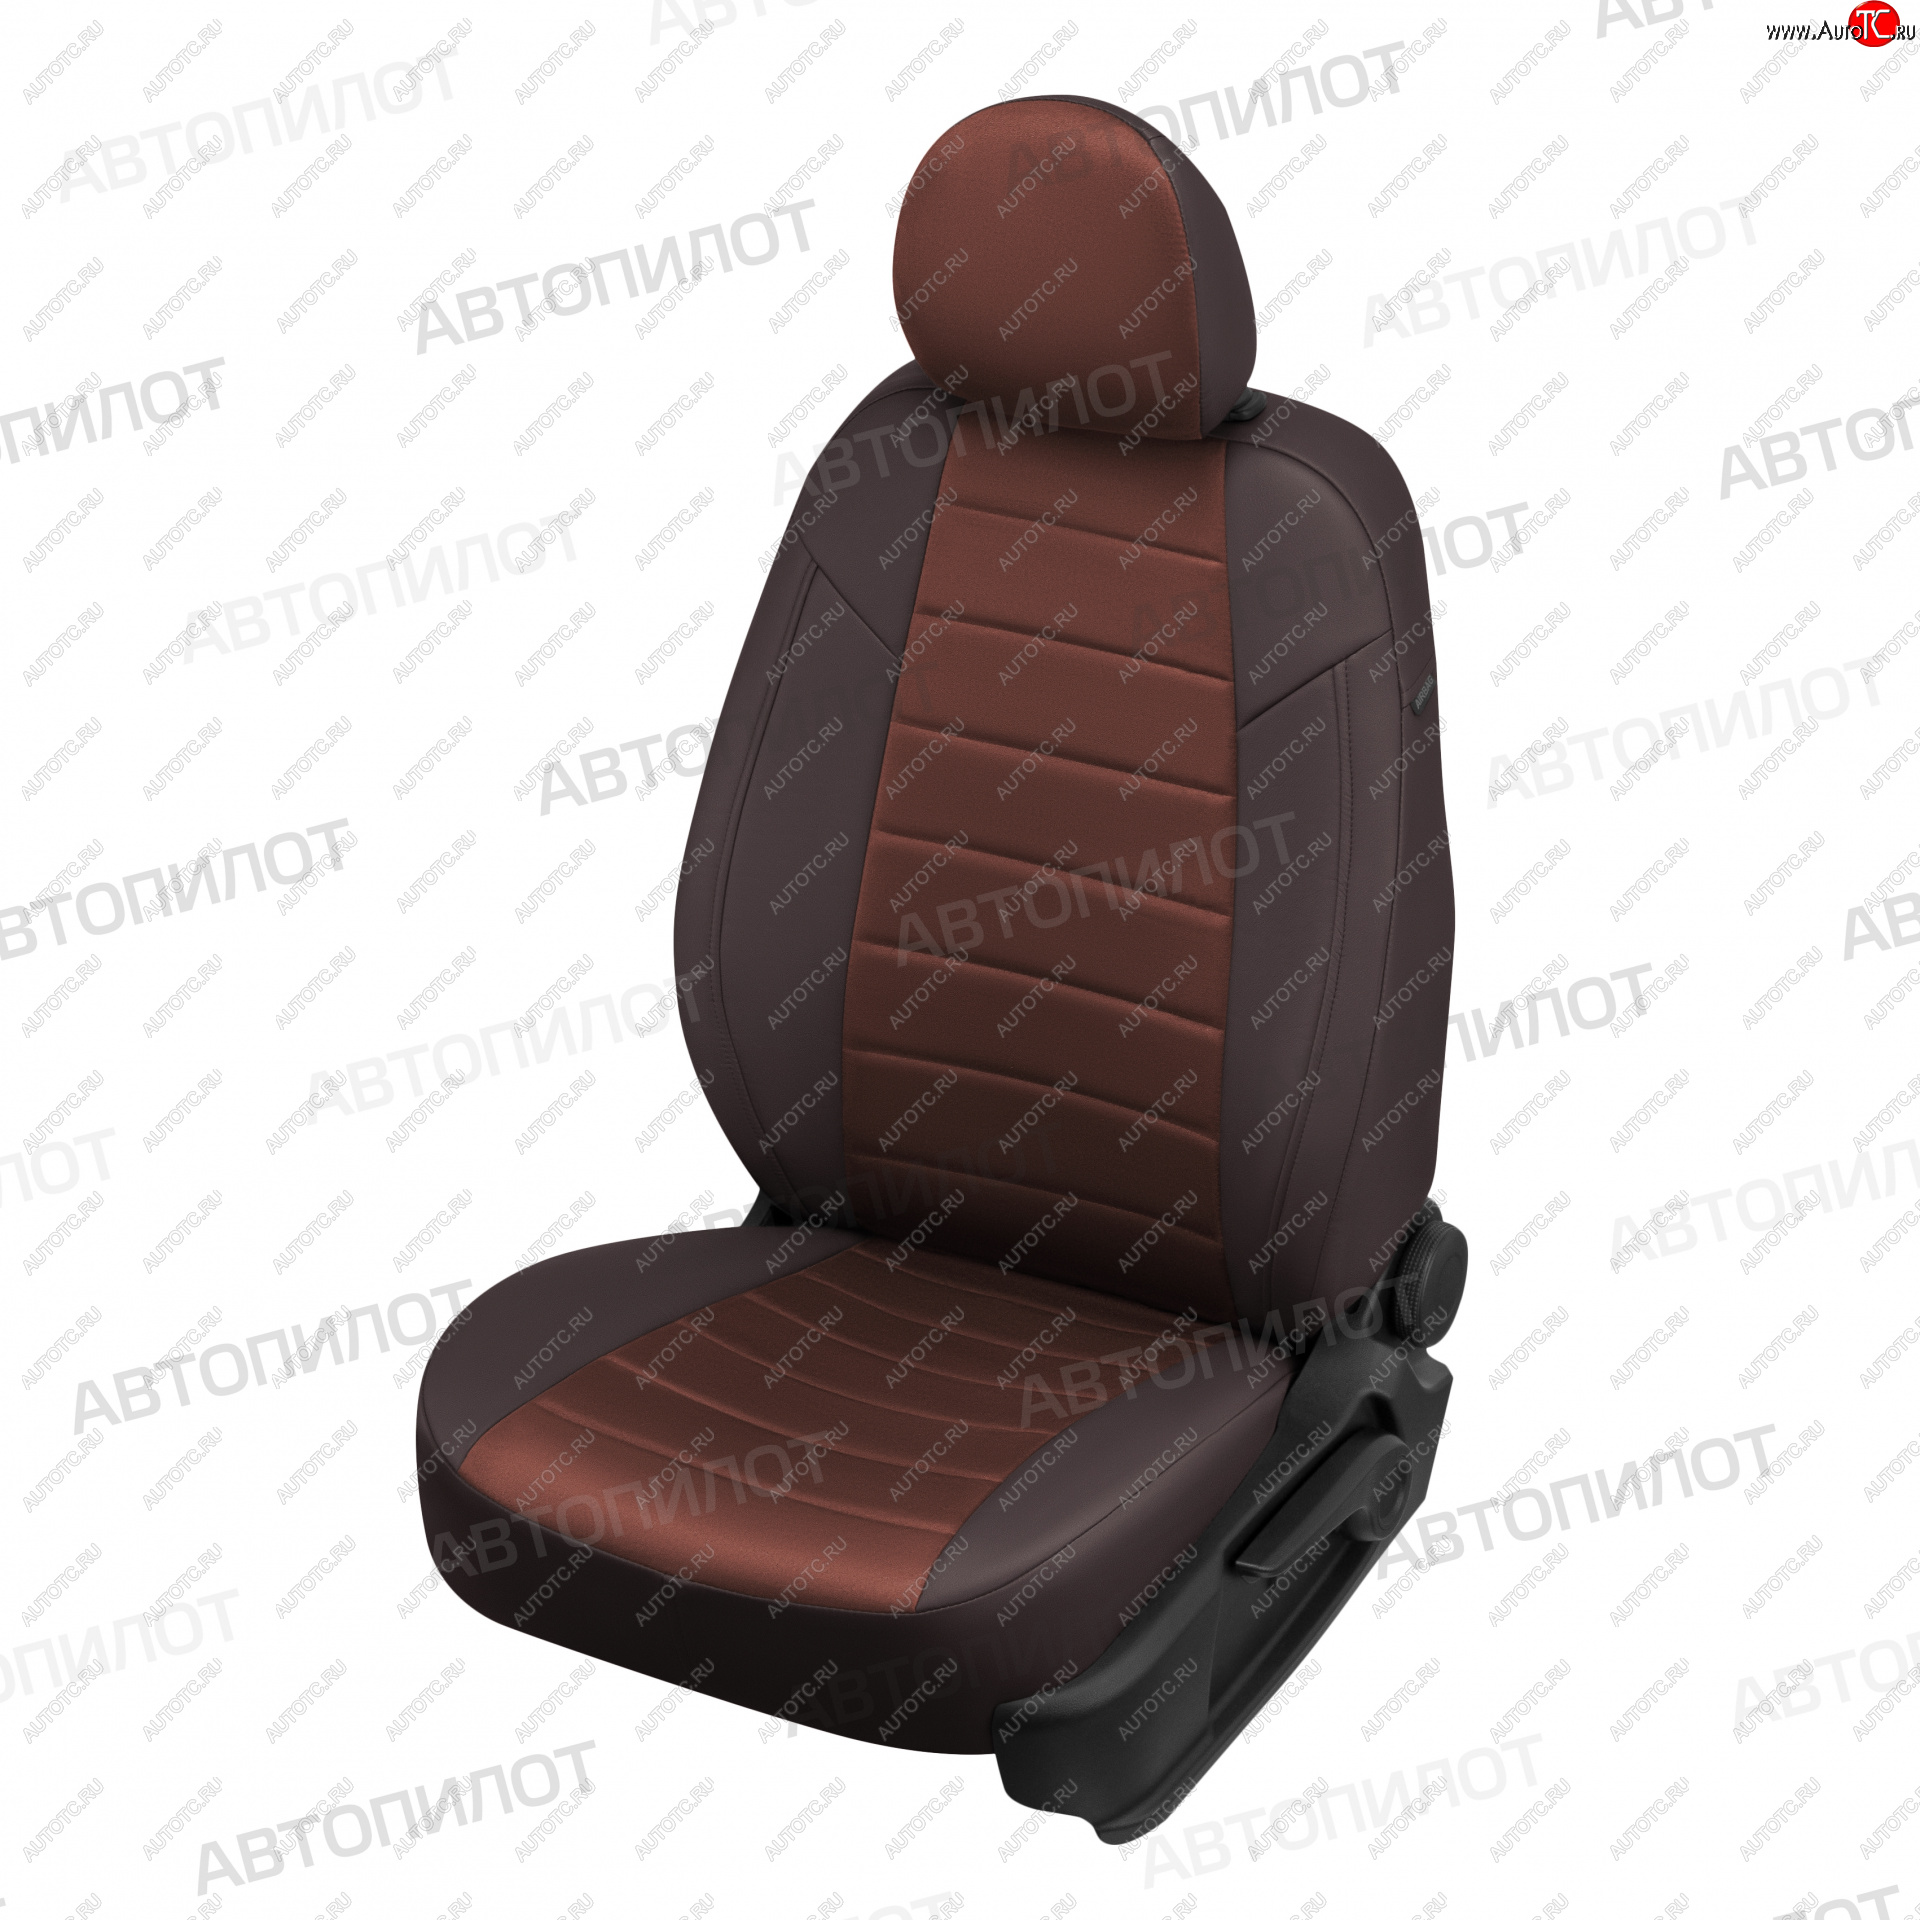 13 449 р. Чехлы сидений (5 мест, экокожа/алькантара) Автопилот  Ford Galaxy  2 (2006-2015) (шоколад)